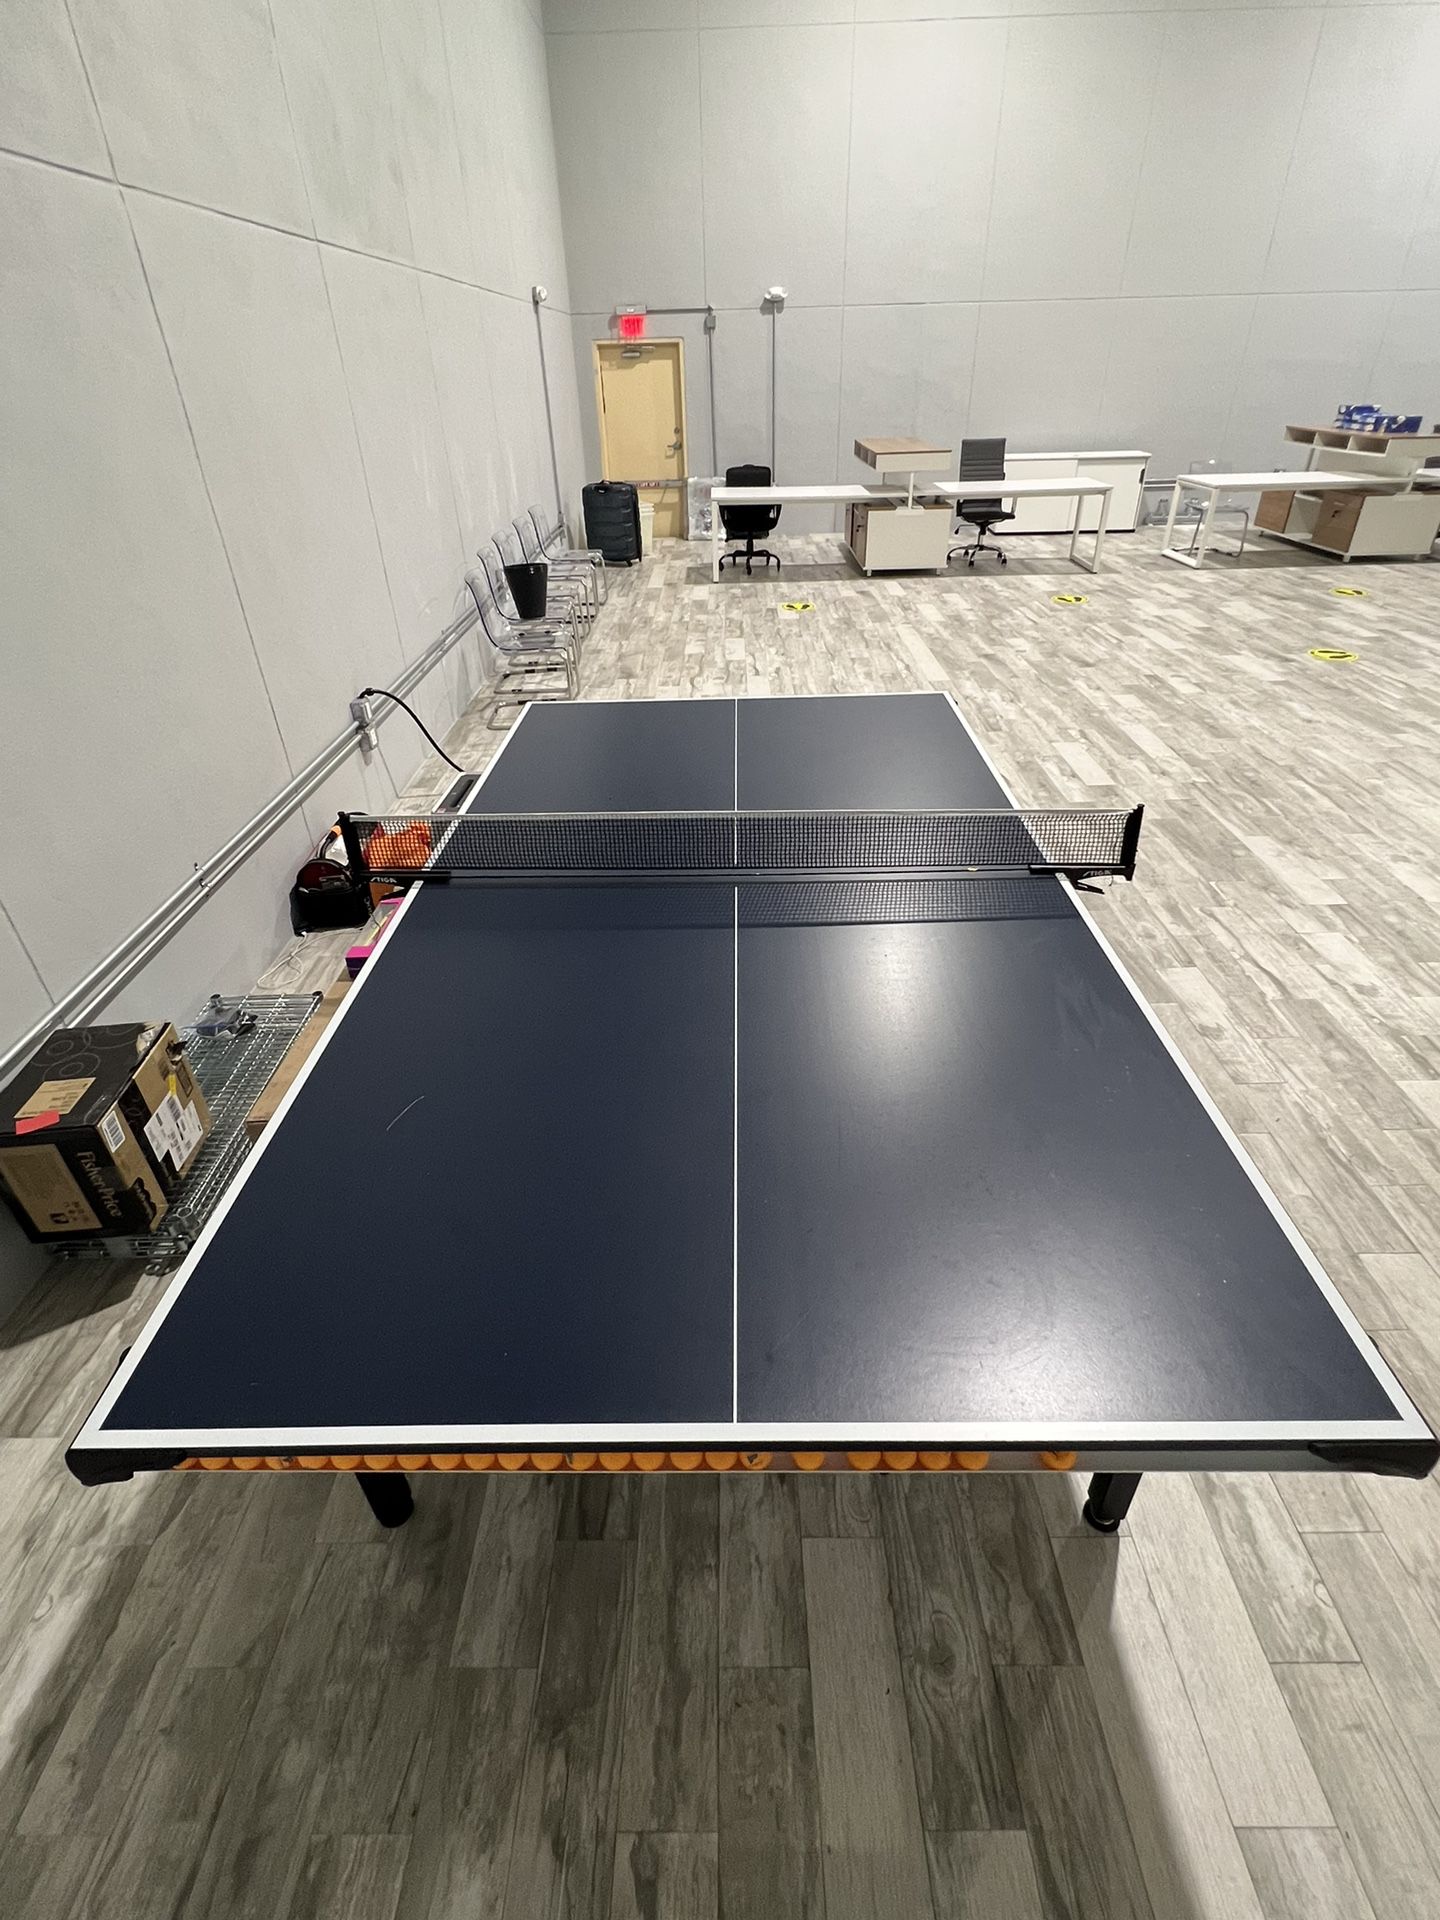 STIGA Ping Pong Table